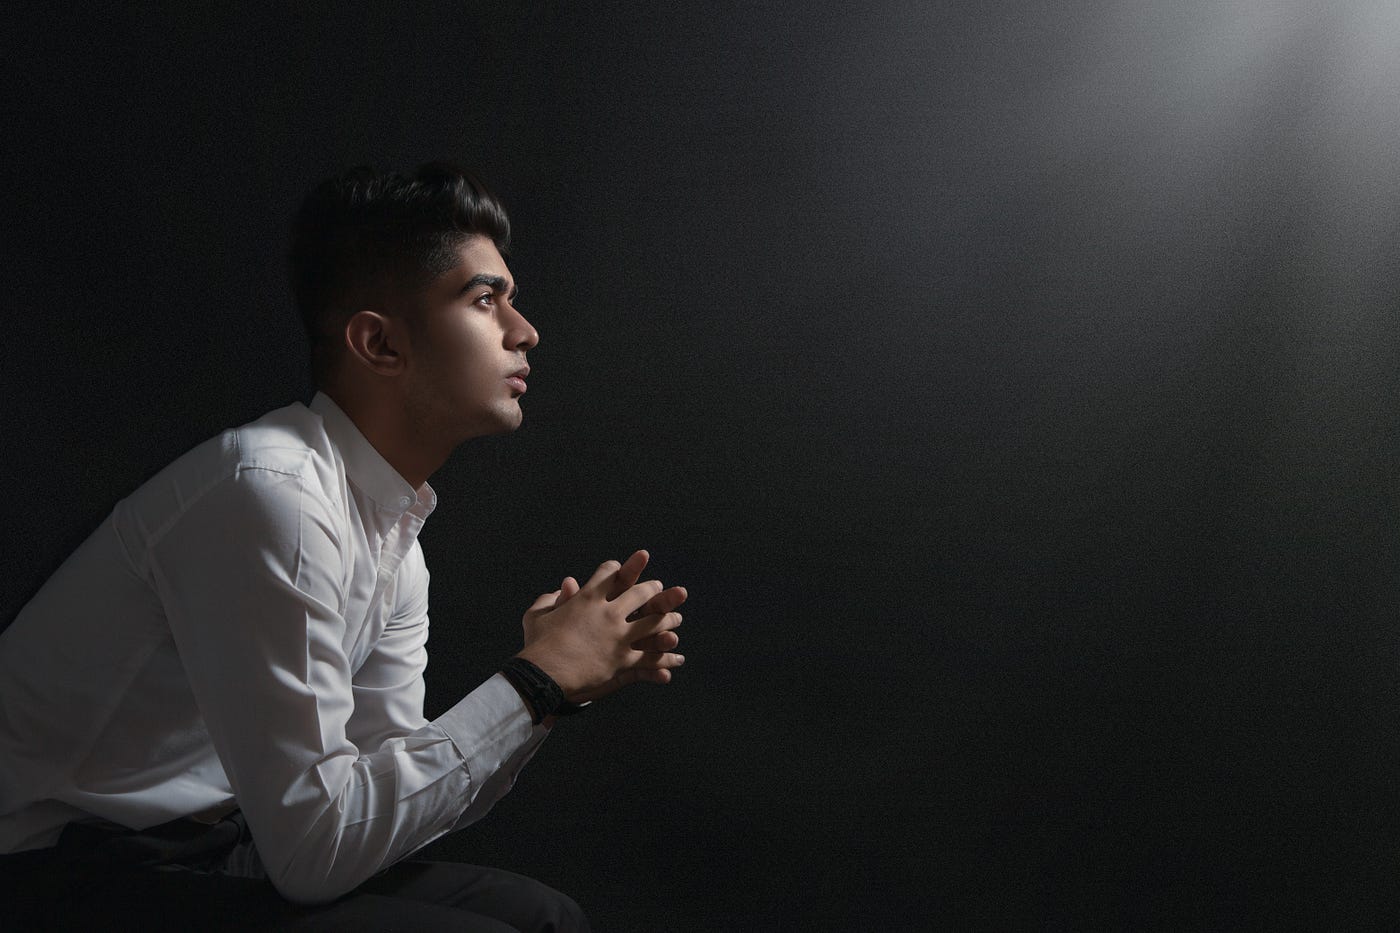 A young man in a white shirt praying.